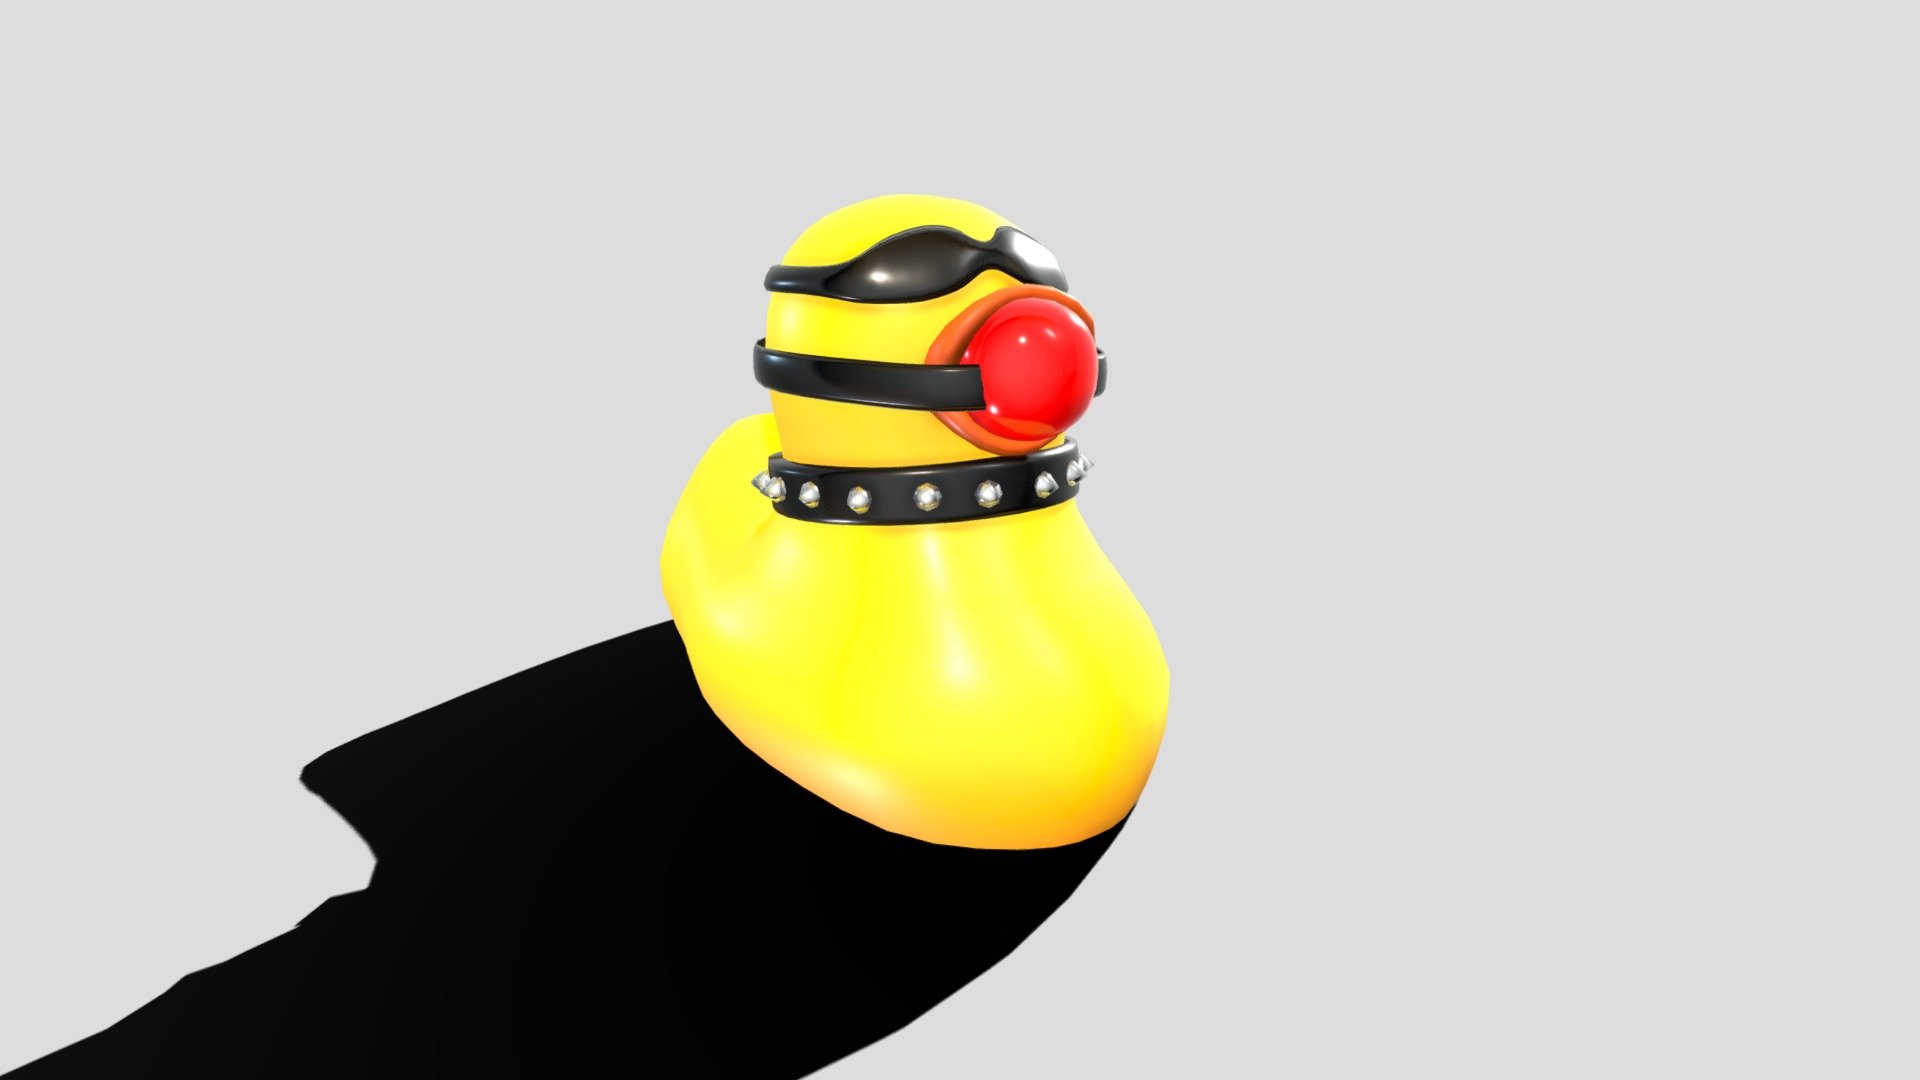 Bdsm Bondage Rubber Duck 3d Model By Ornison [4c79ed5] Sketchfab